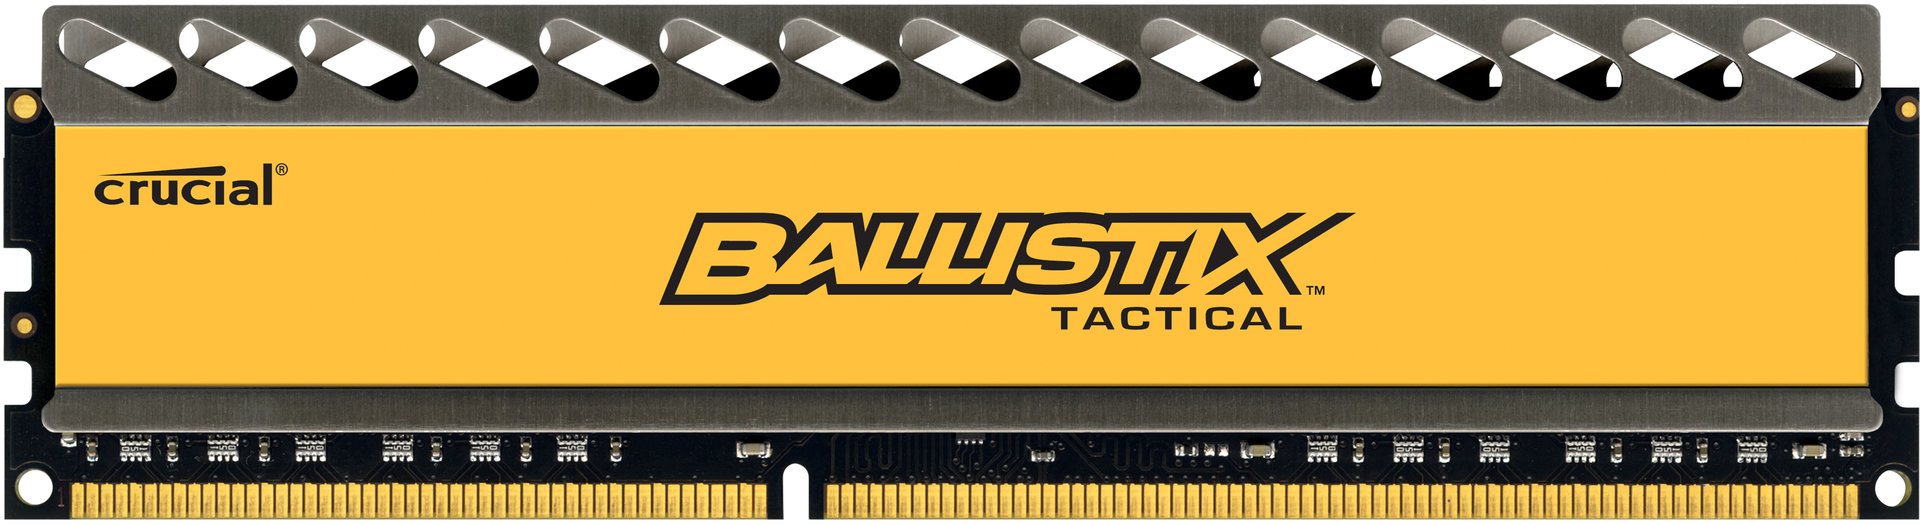 Crucial Ballistix Tactical 8 GB DDR3